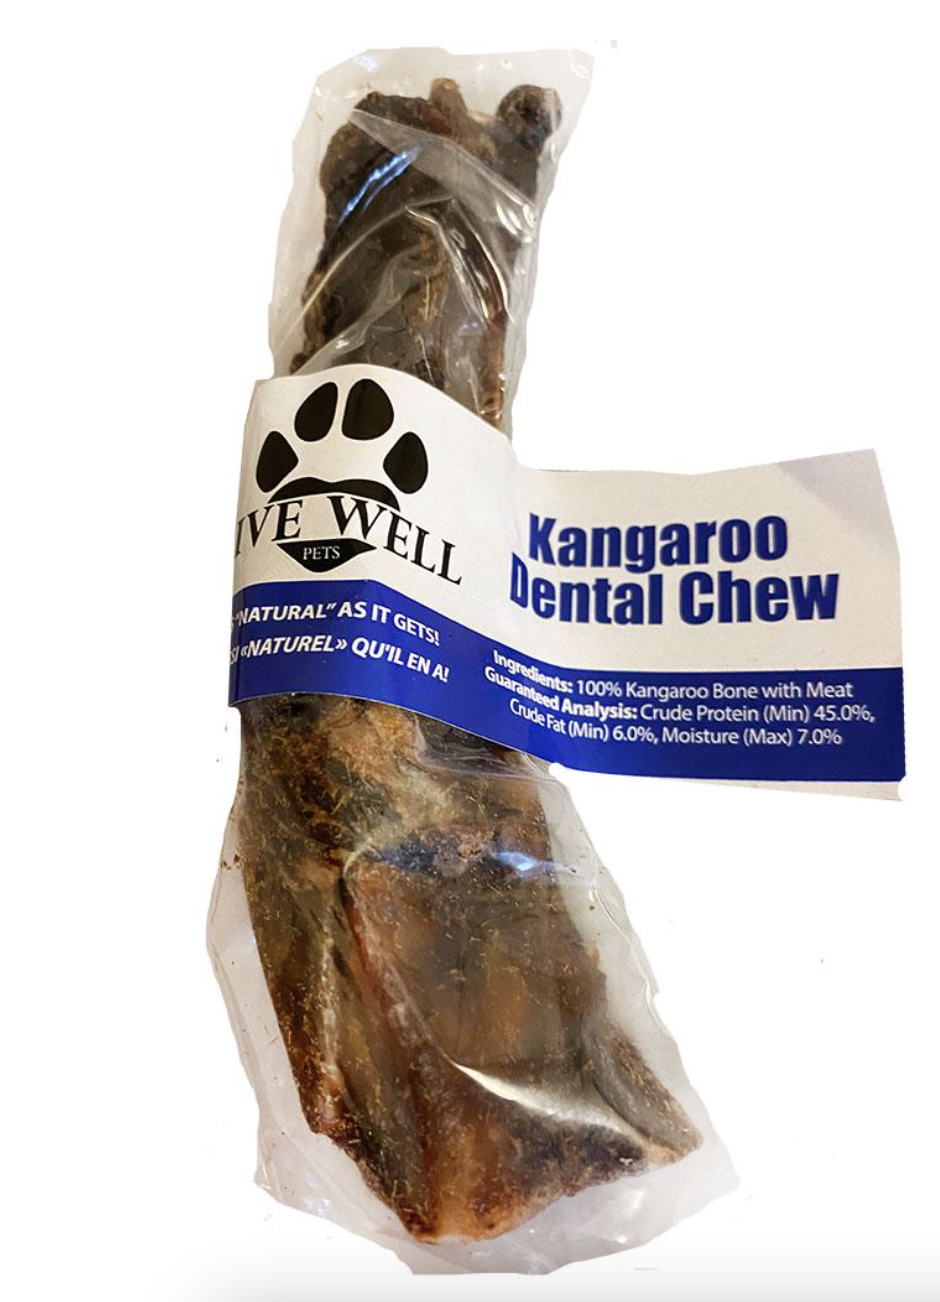 Kangaroo Dental Chew - LIVE WELL